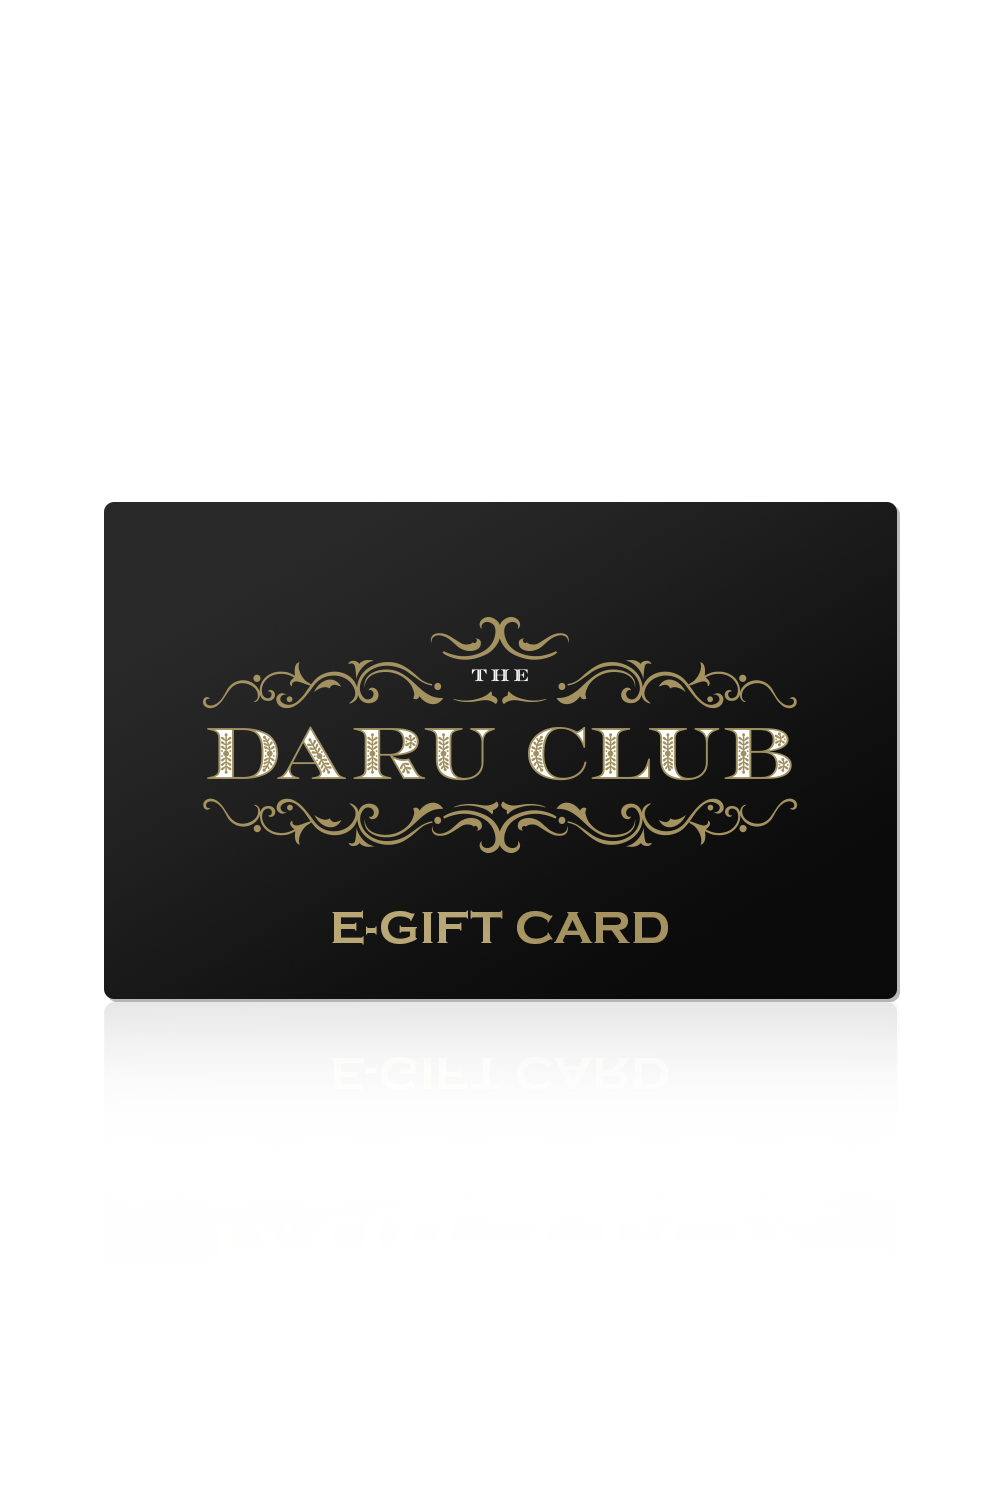 The Daru Club E-Gift Card